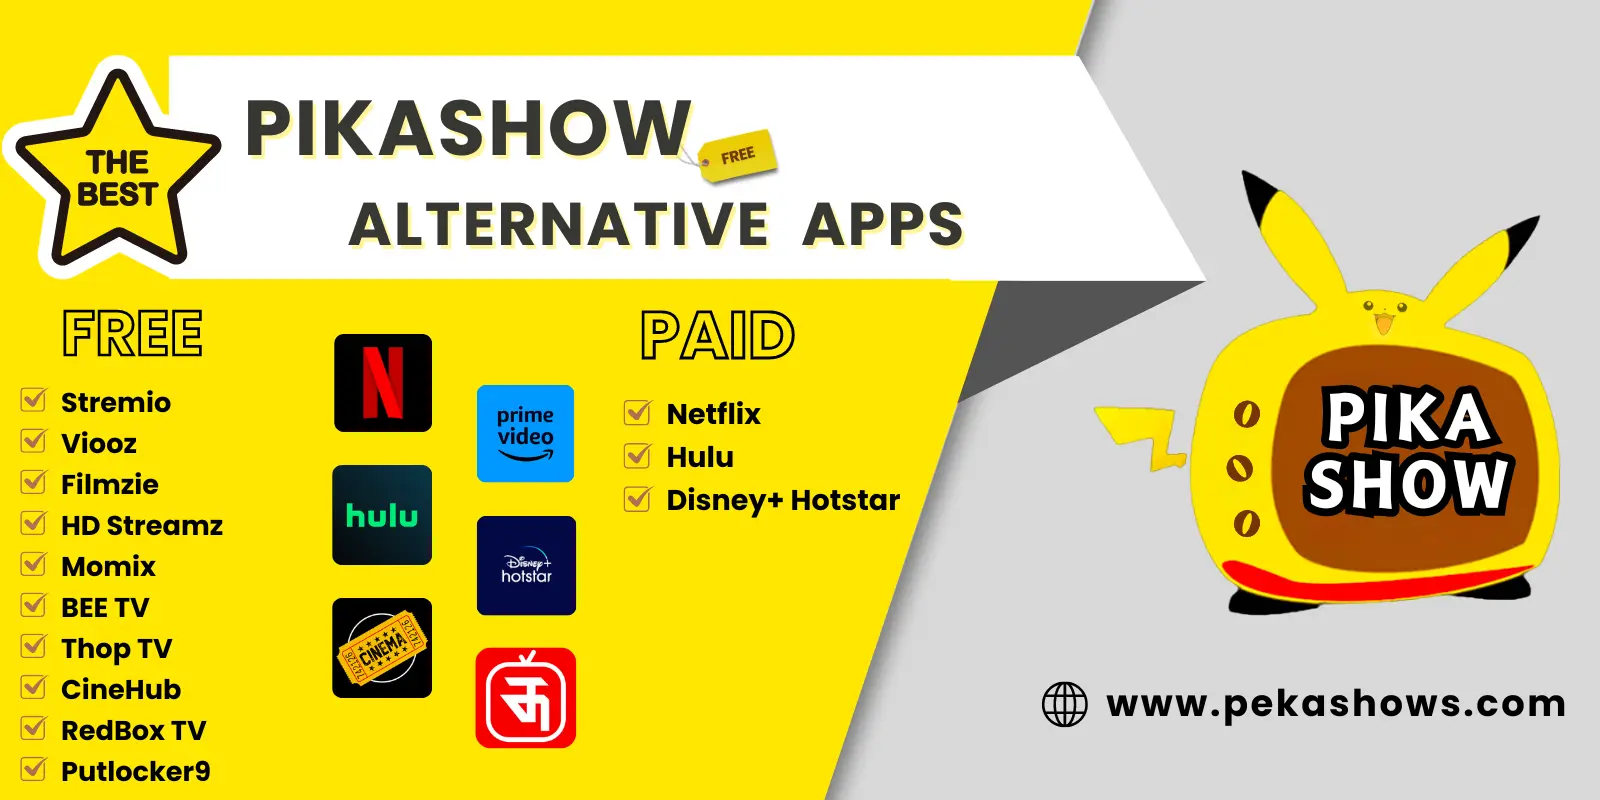 PikaShow Alternative Apps